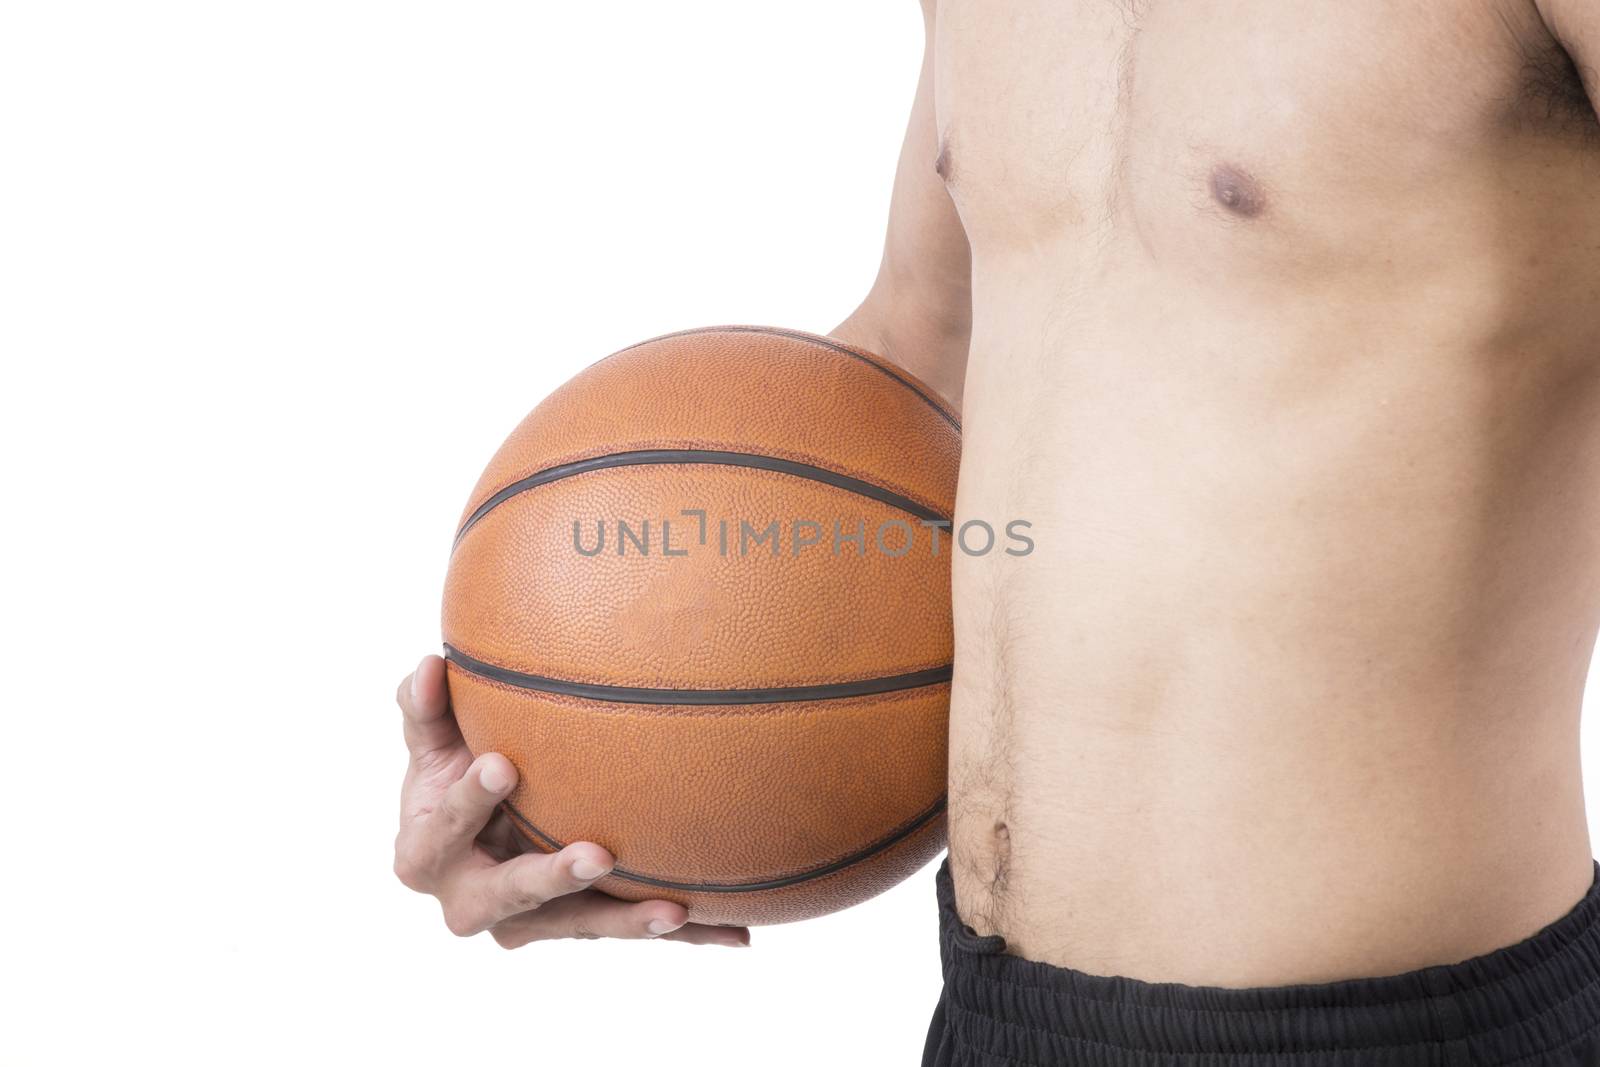 body man basketball by panuruangjan